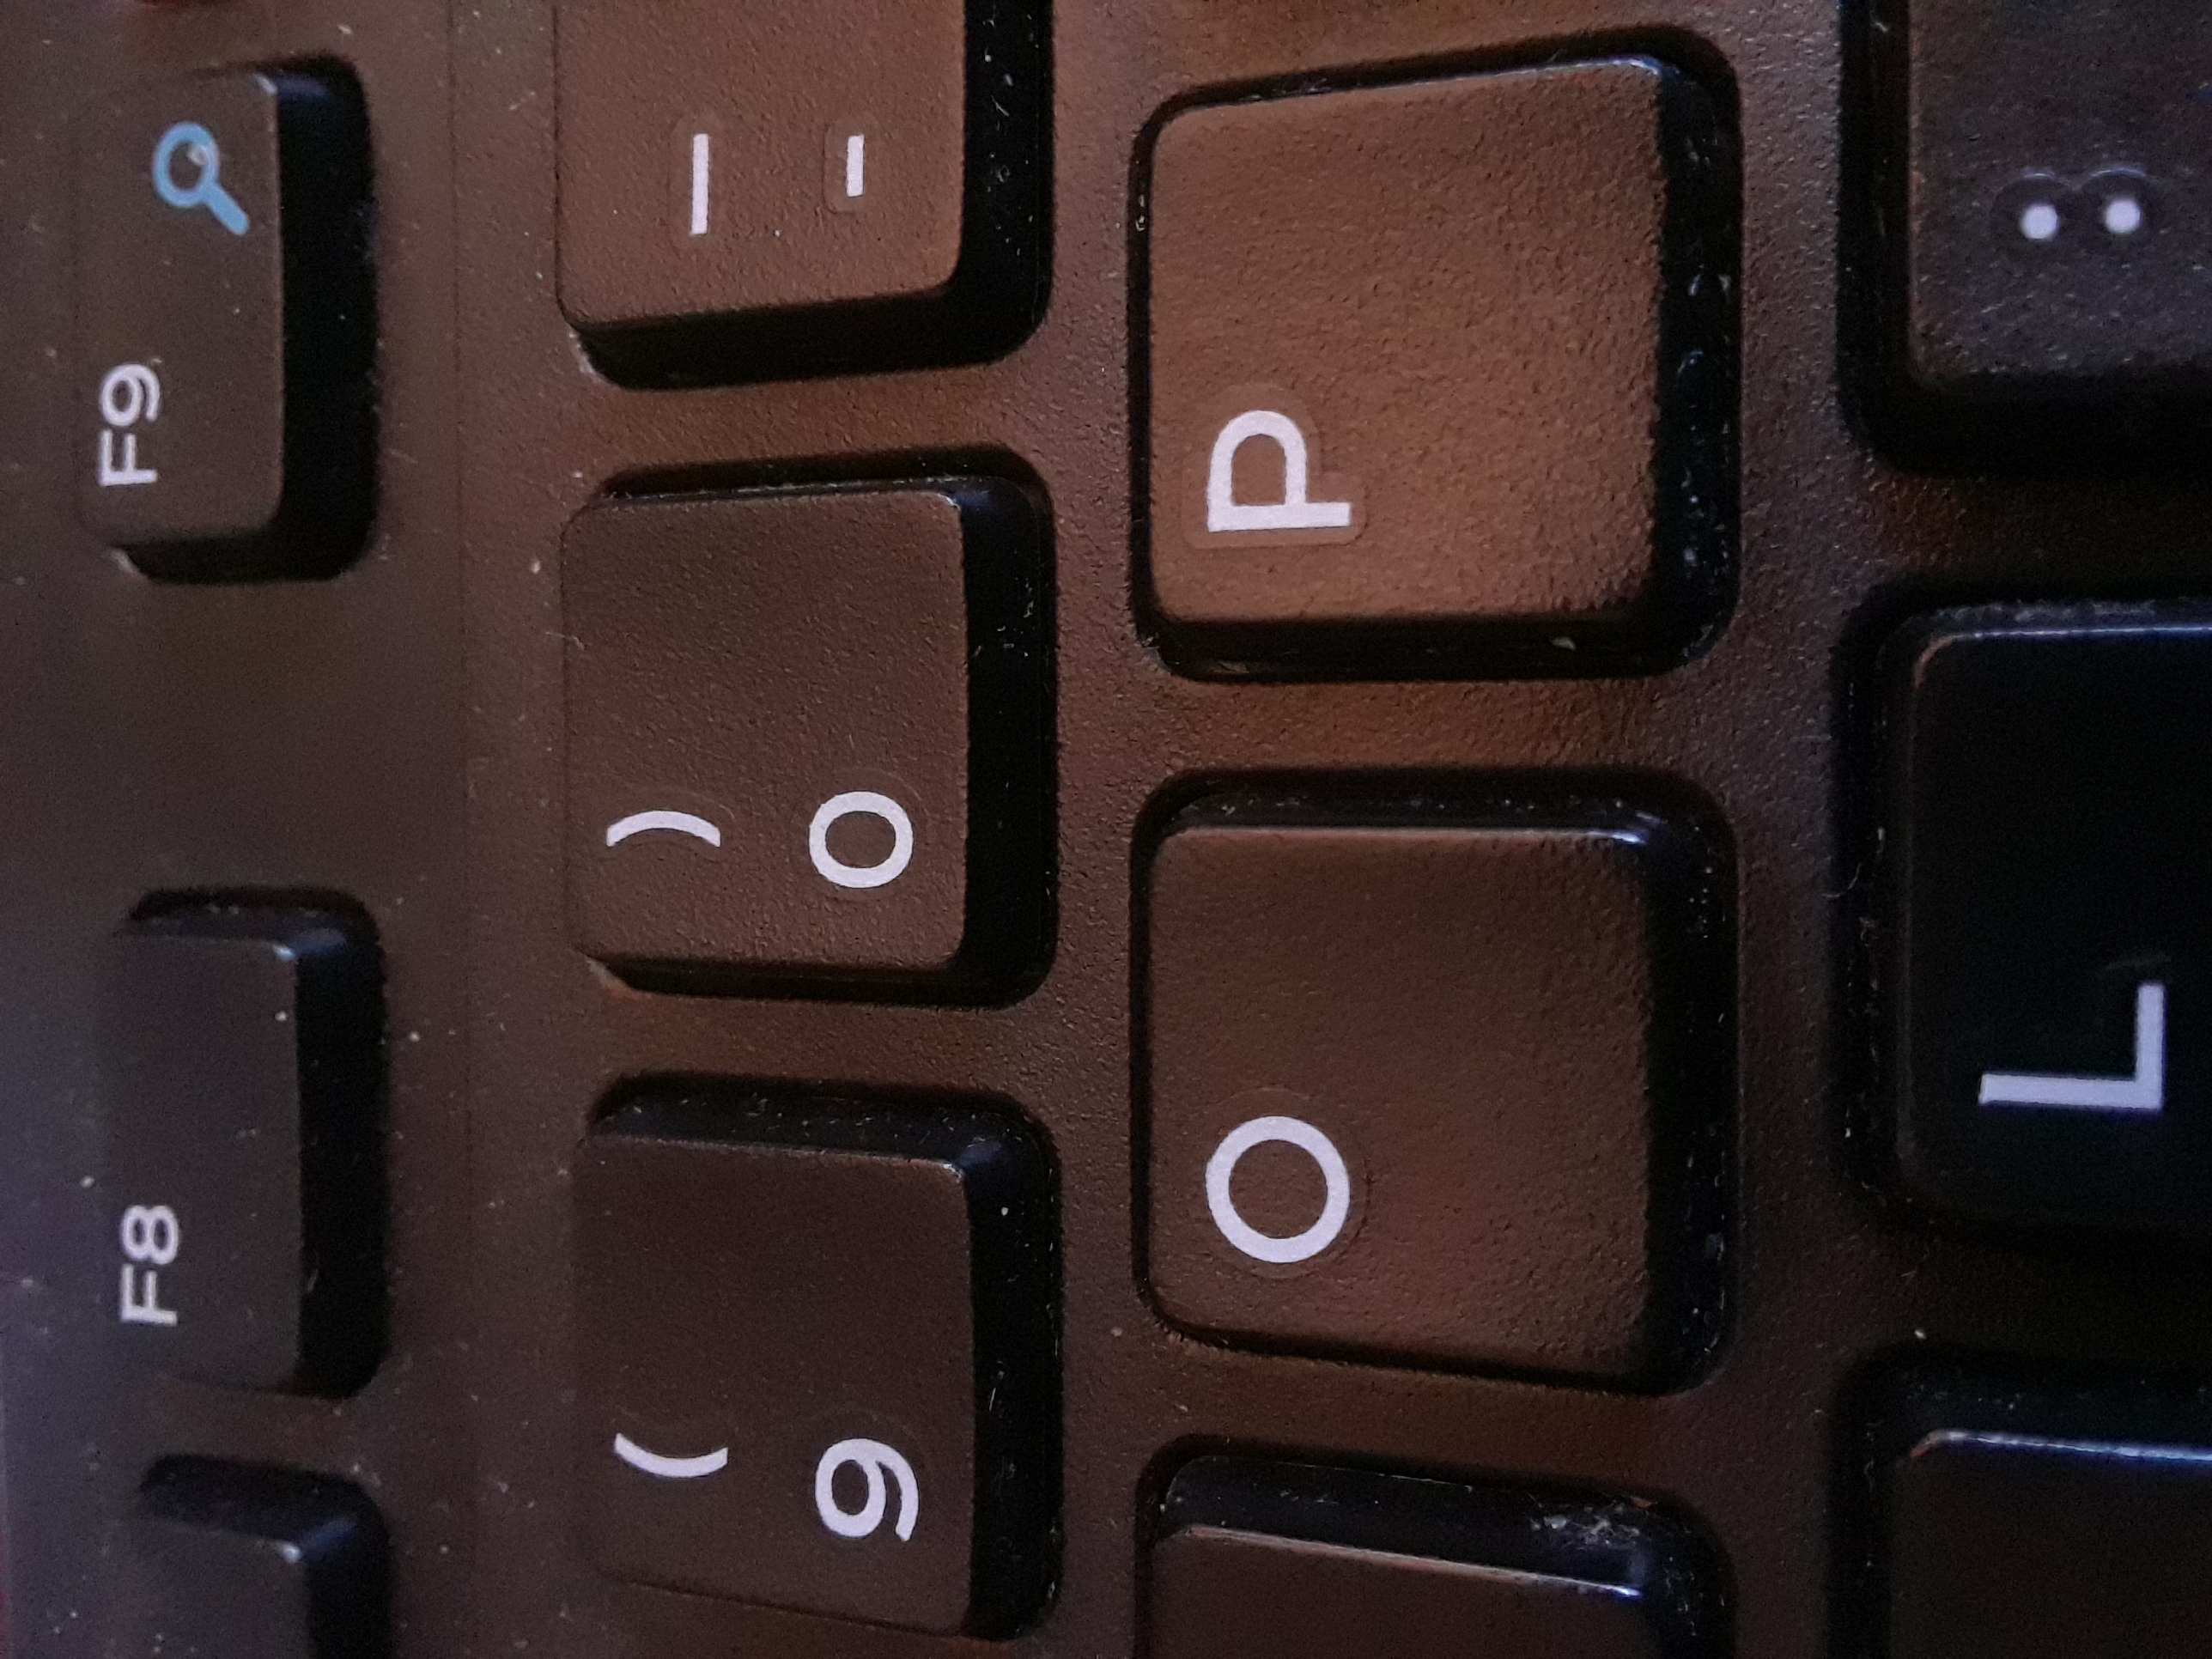 Keyboard focused on O0P